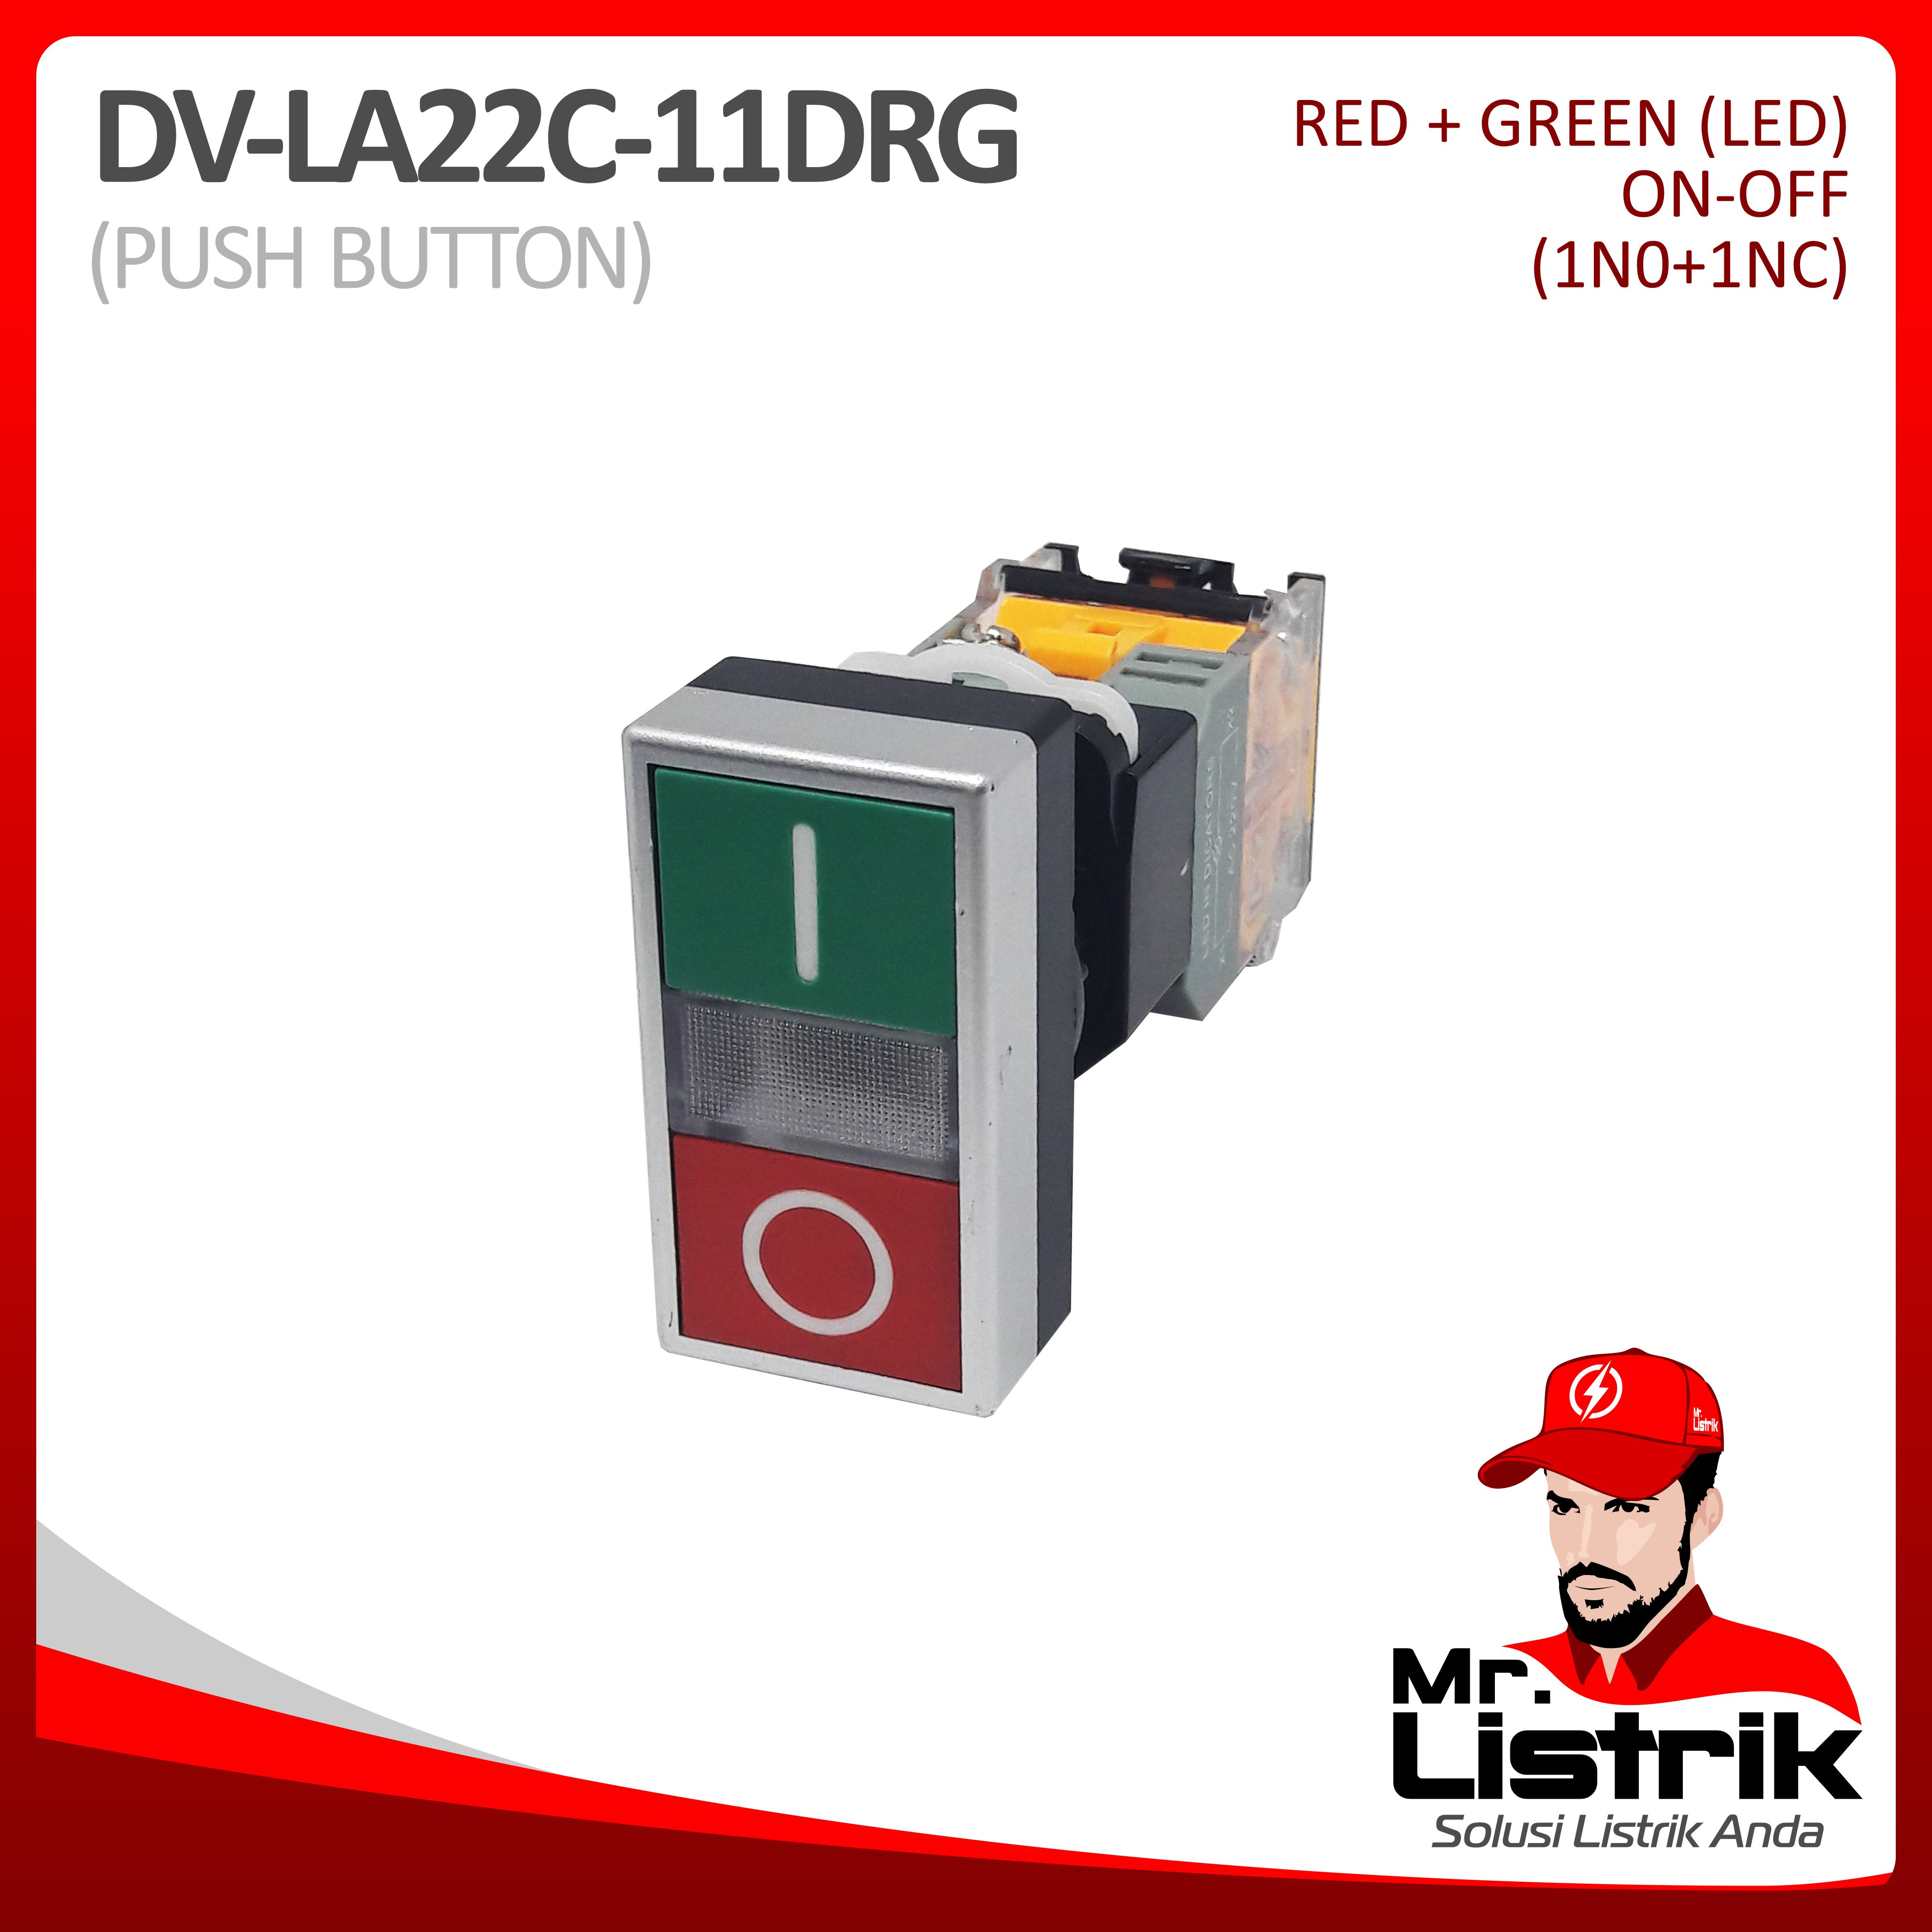 Double Push Button LED 1NO+1NC Fixed Contact LA22C-11DRG